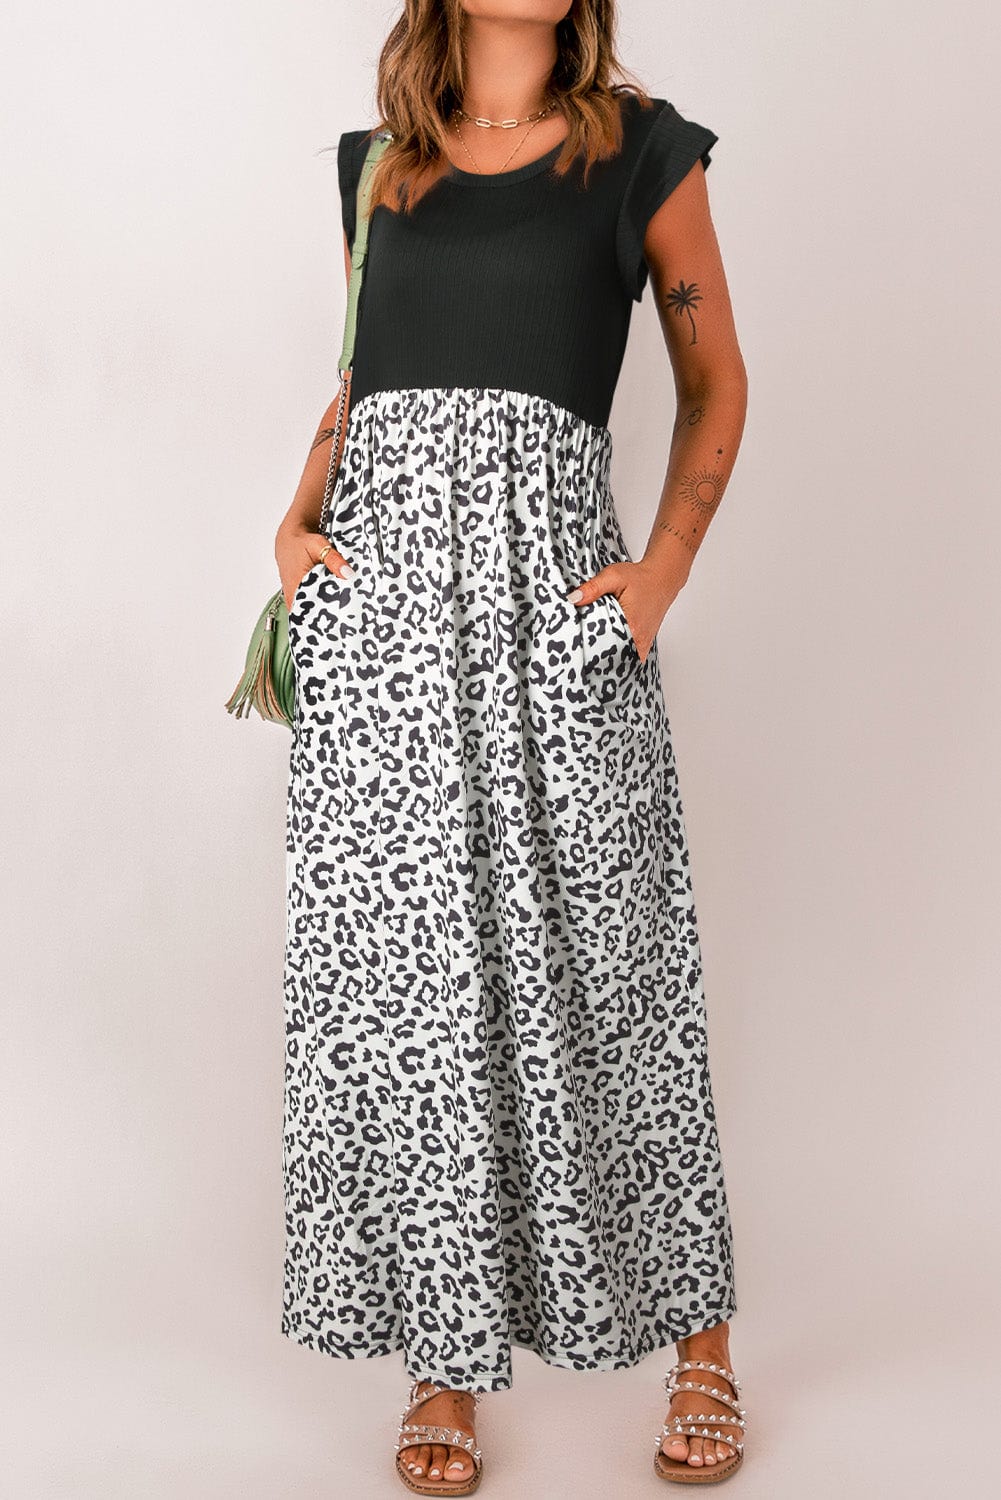 Leopard Print Round Neck Maxi Dress with Pockets